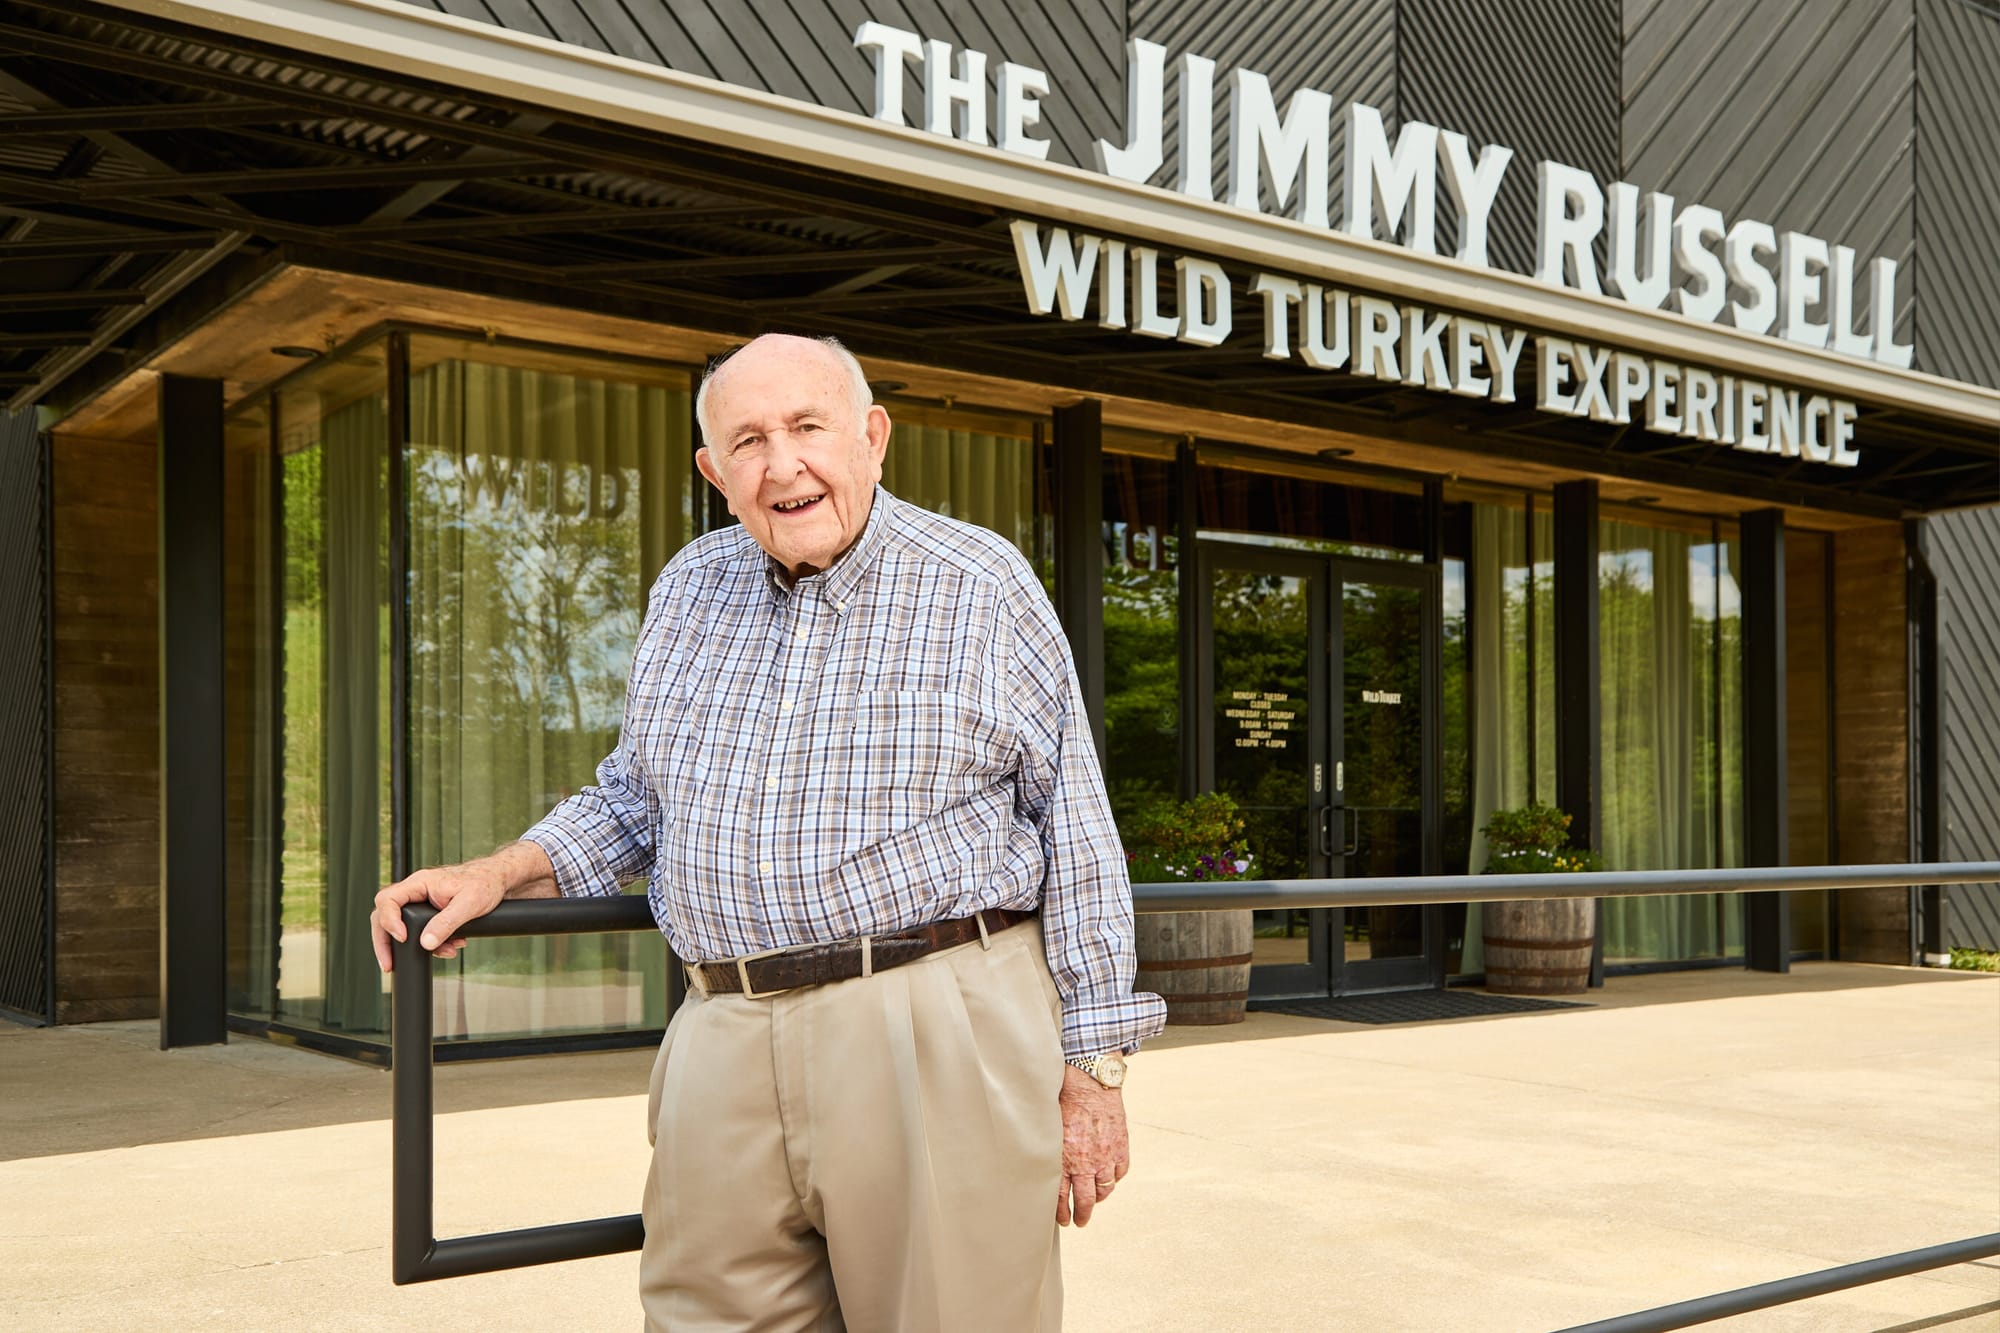 Jimmy Russell Wild Turkey Experience Opens